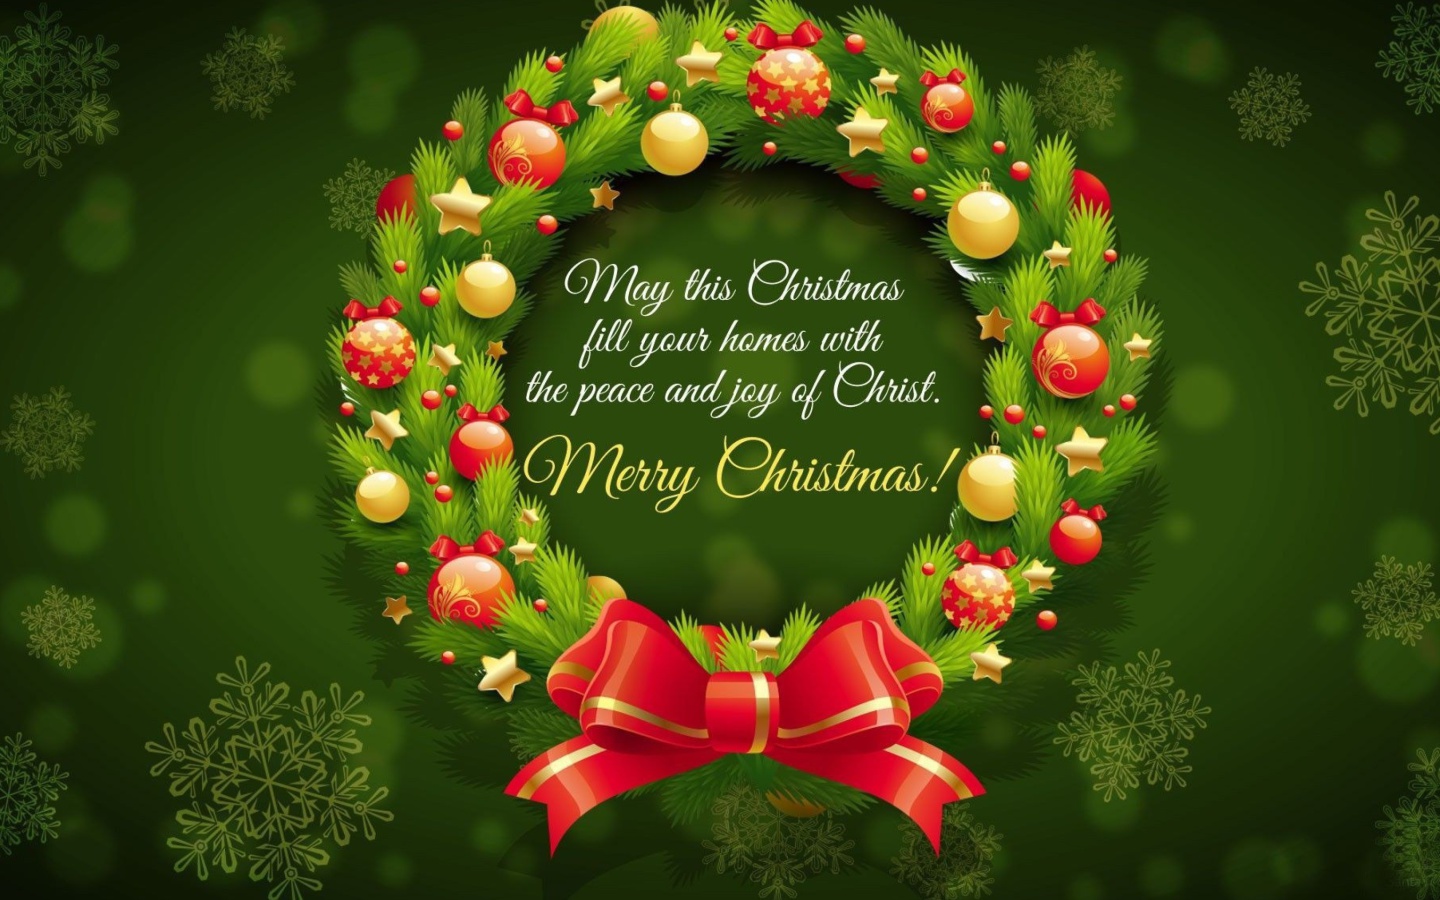 Das Merry Christmas 25 December SMS Wish Wallpaper 1440x900